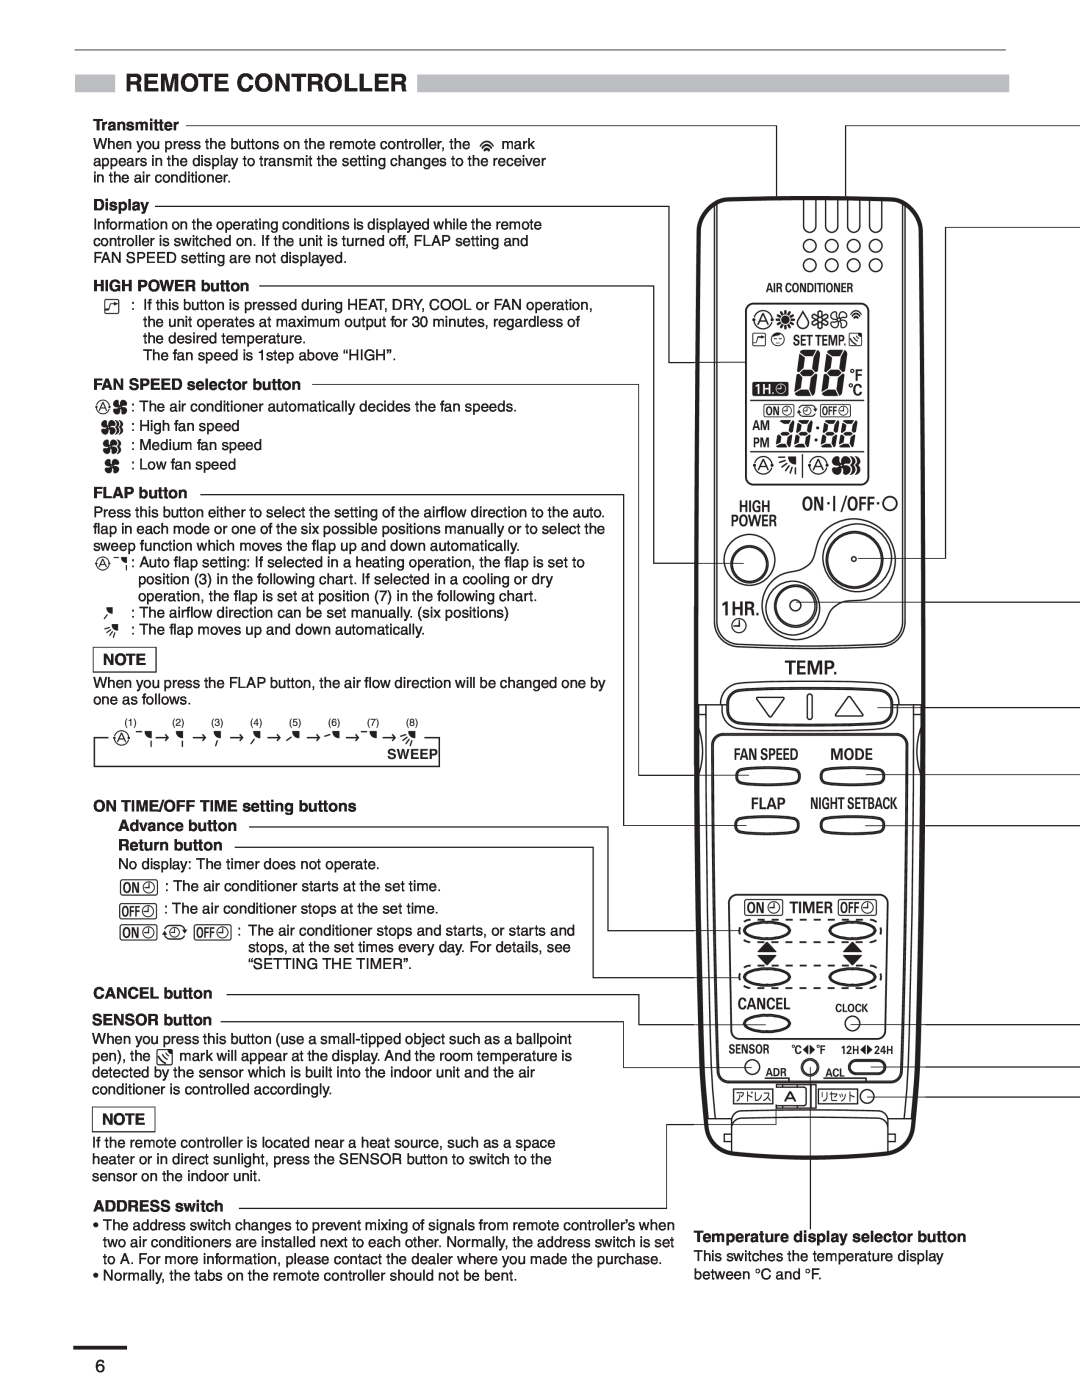 Panasonic CU-4KE31NBU Remote Controller, Transmitter, Display, HIGH POWER button, FAN SPEED selector button, FLAP button 